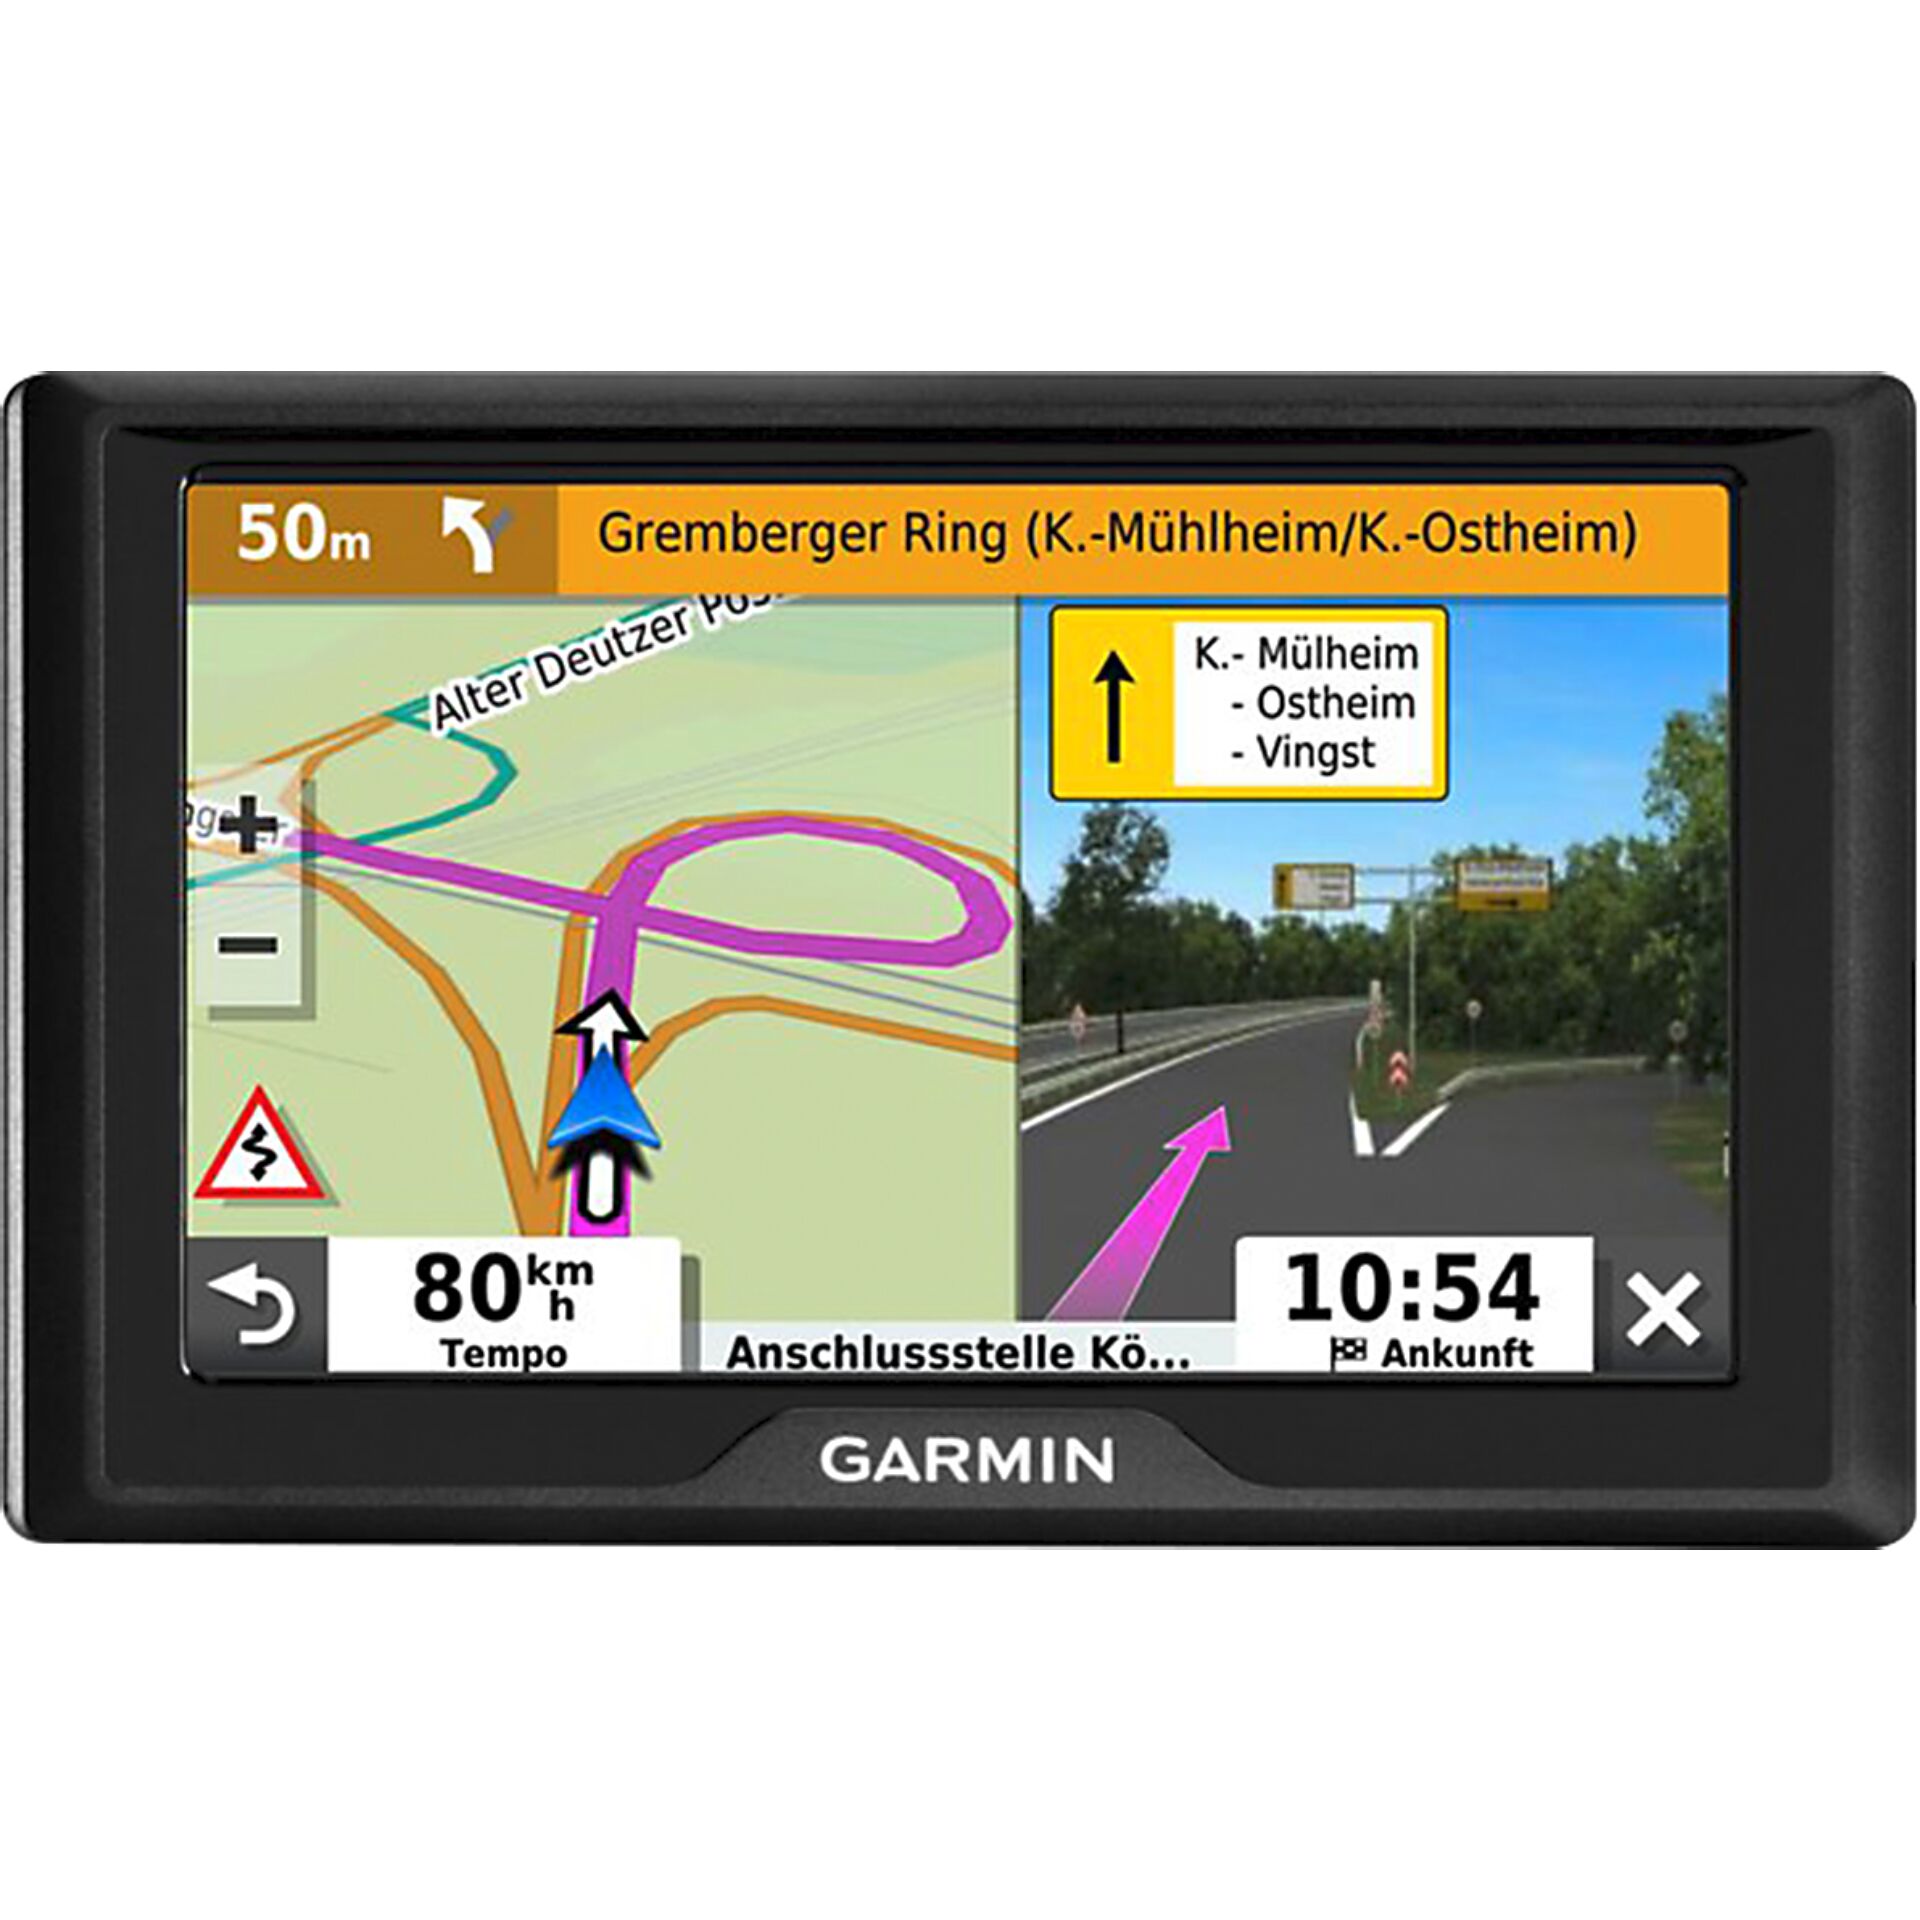 Drive bei Traffic Garmin 52 Live Navigationssystem günstig